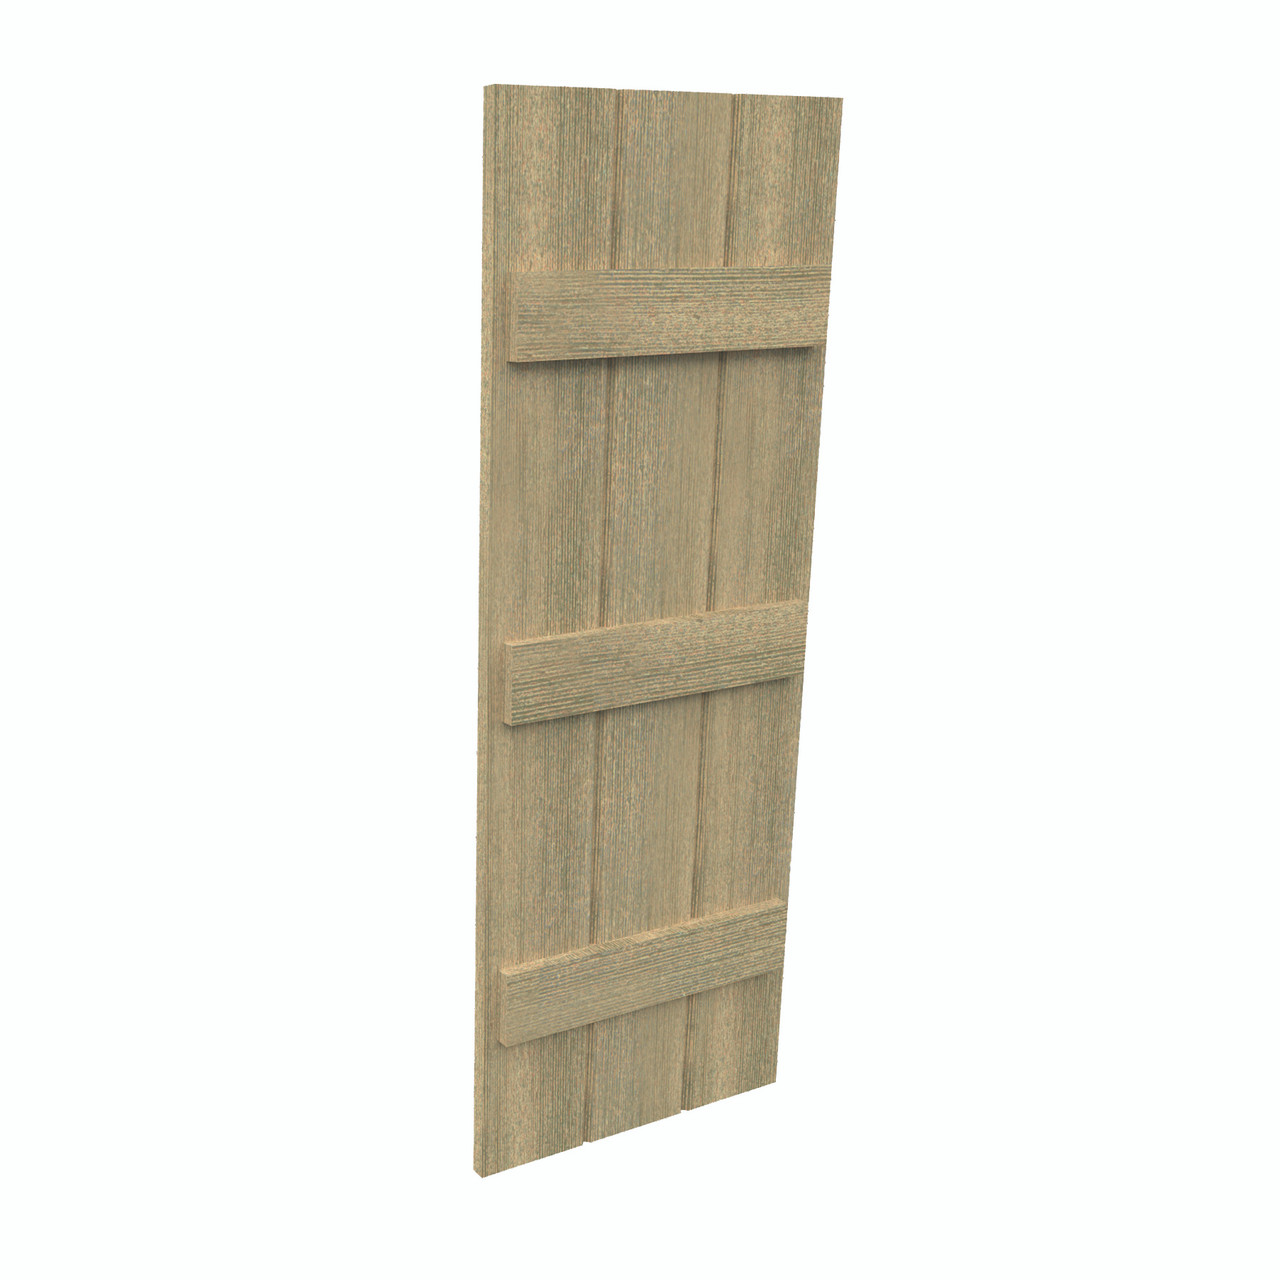 18 inch by 25 inch Plank Shutter with 3-Plank, 3-Batten